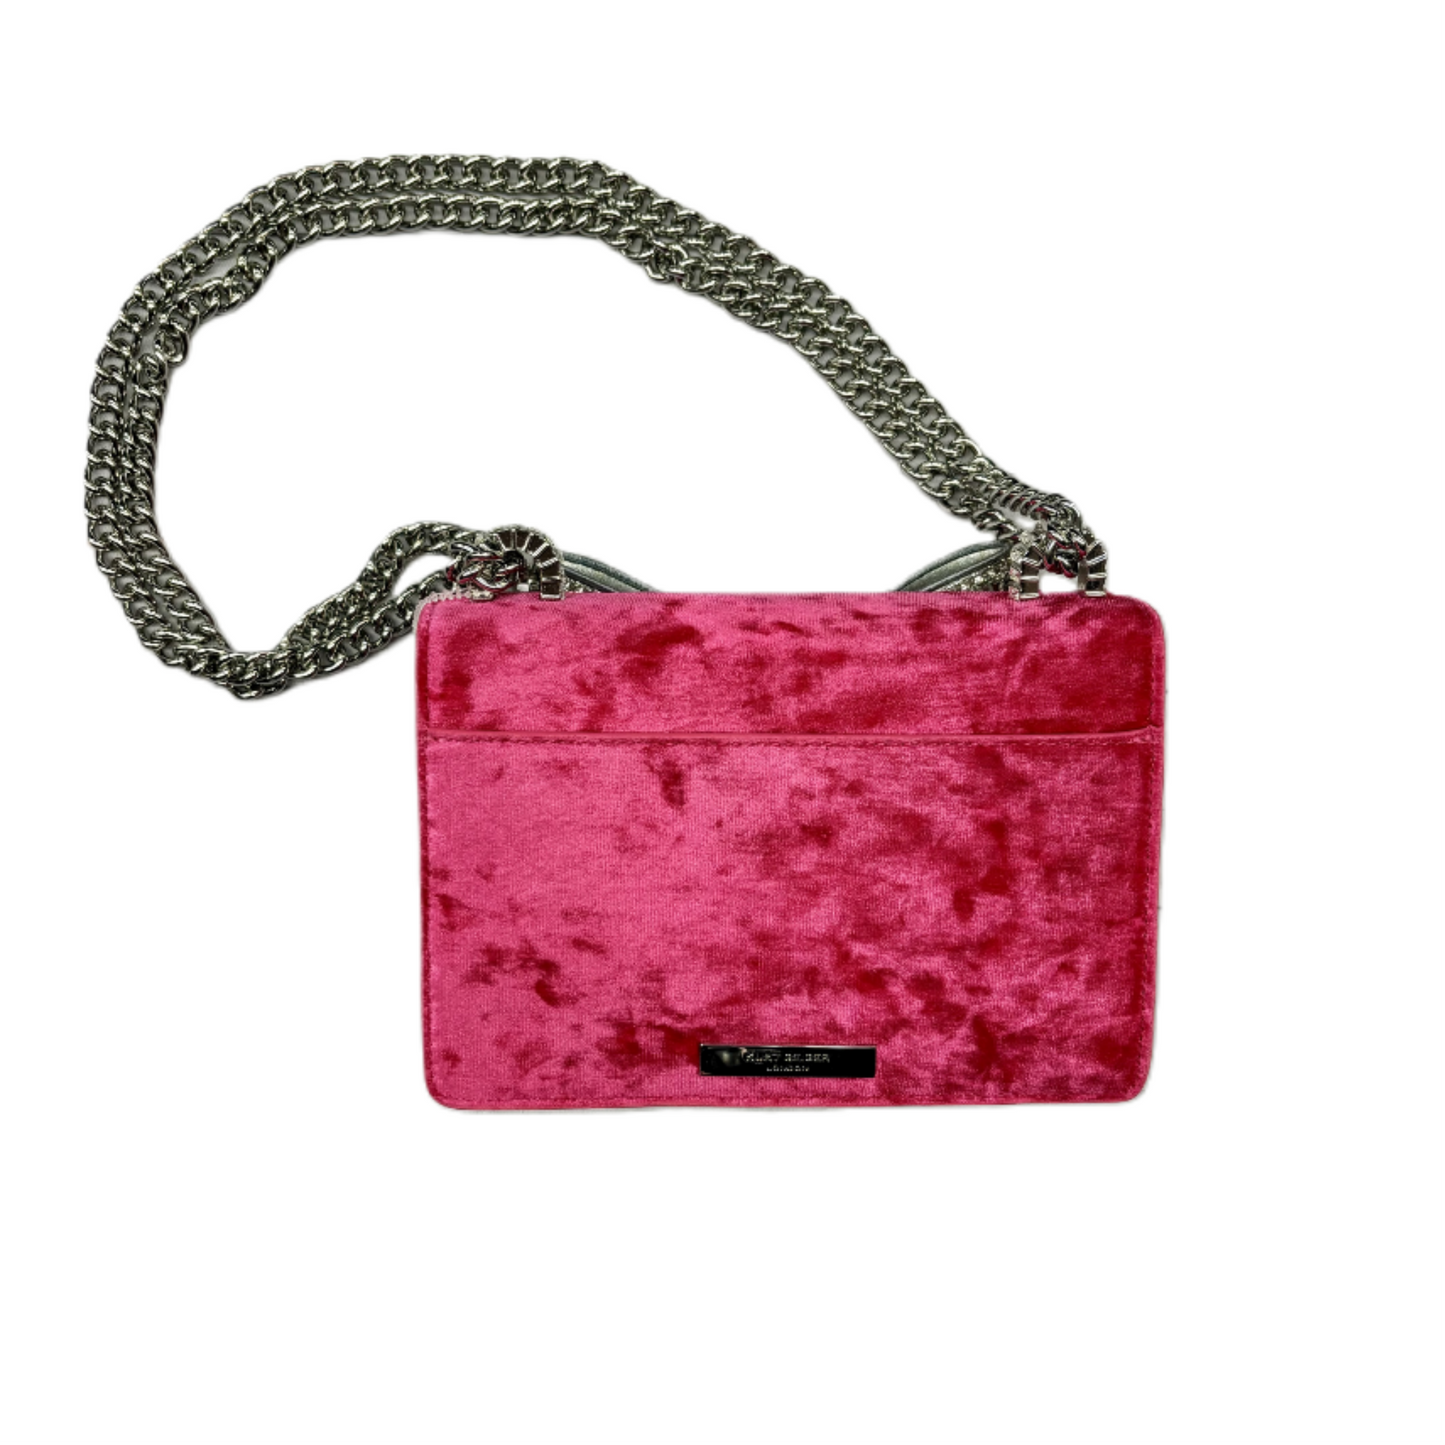 Handbag Designer By Kurt Geiger, Size: Medium